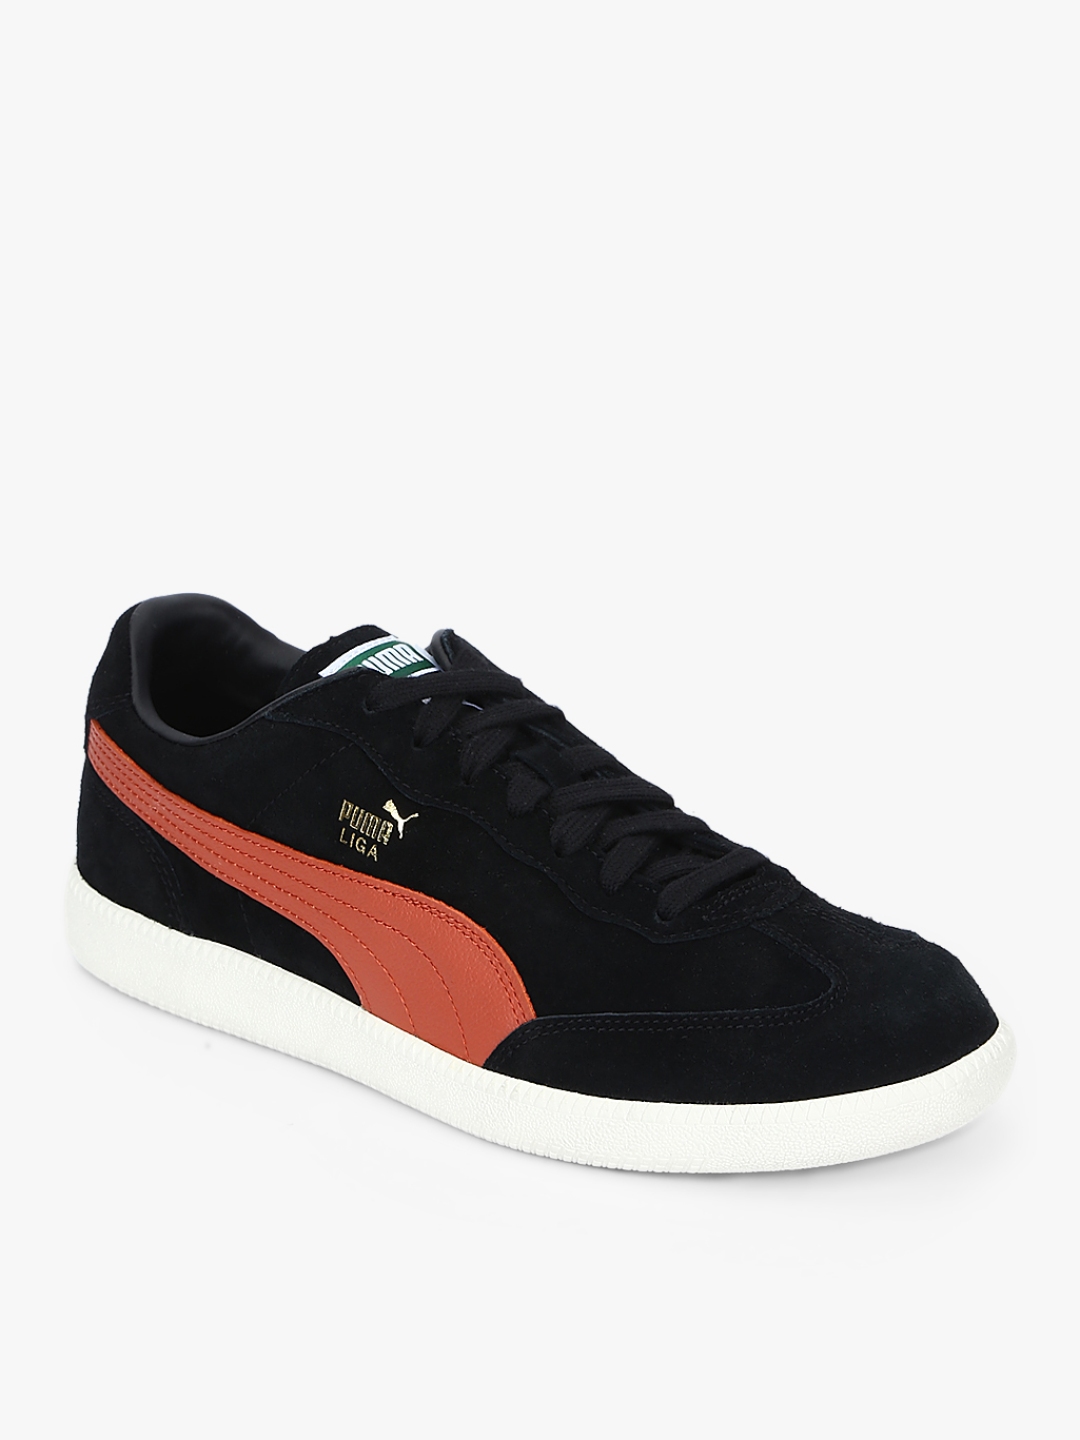 Buy Puma Men Black Sneakers - Casual Shoes for Men 7633786 | Myntra